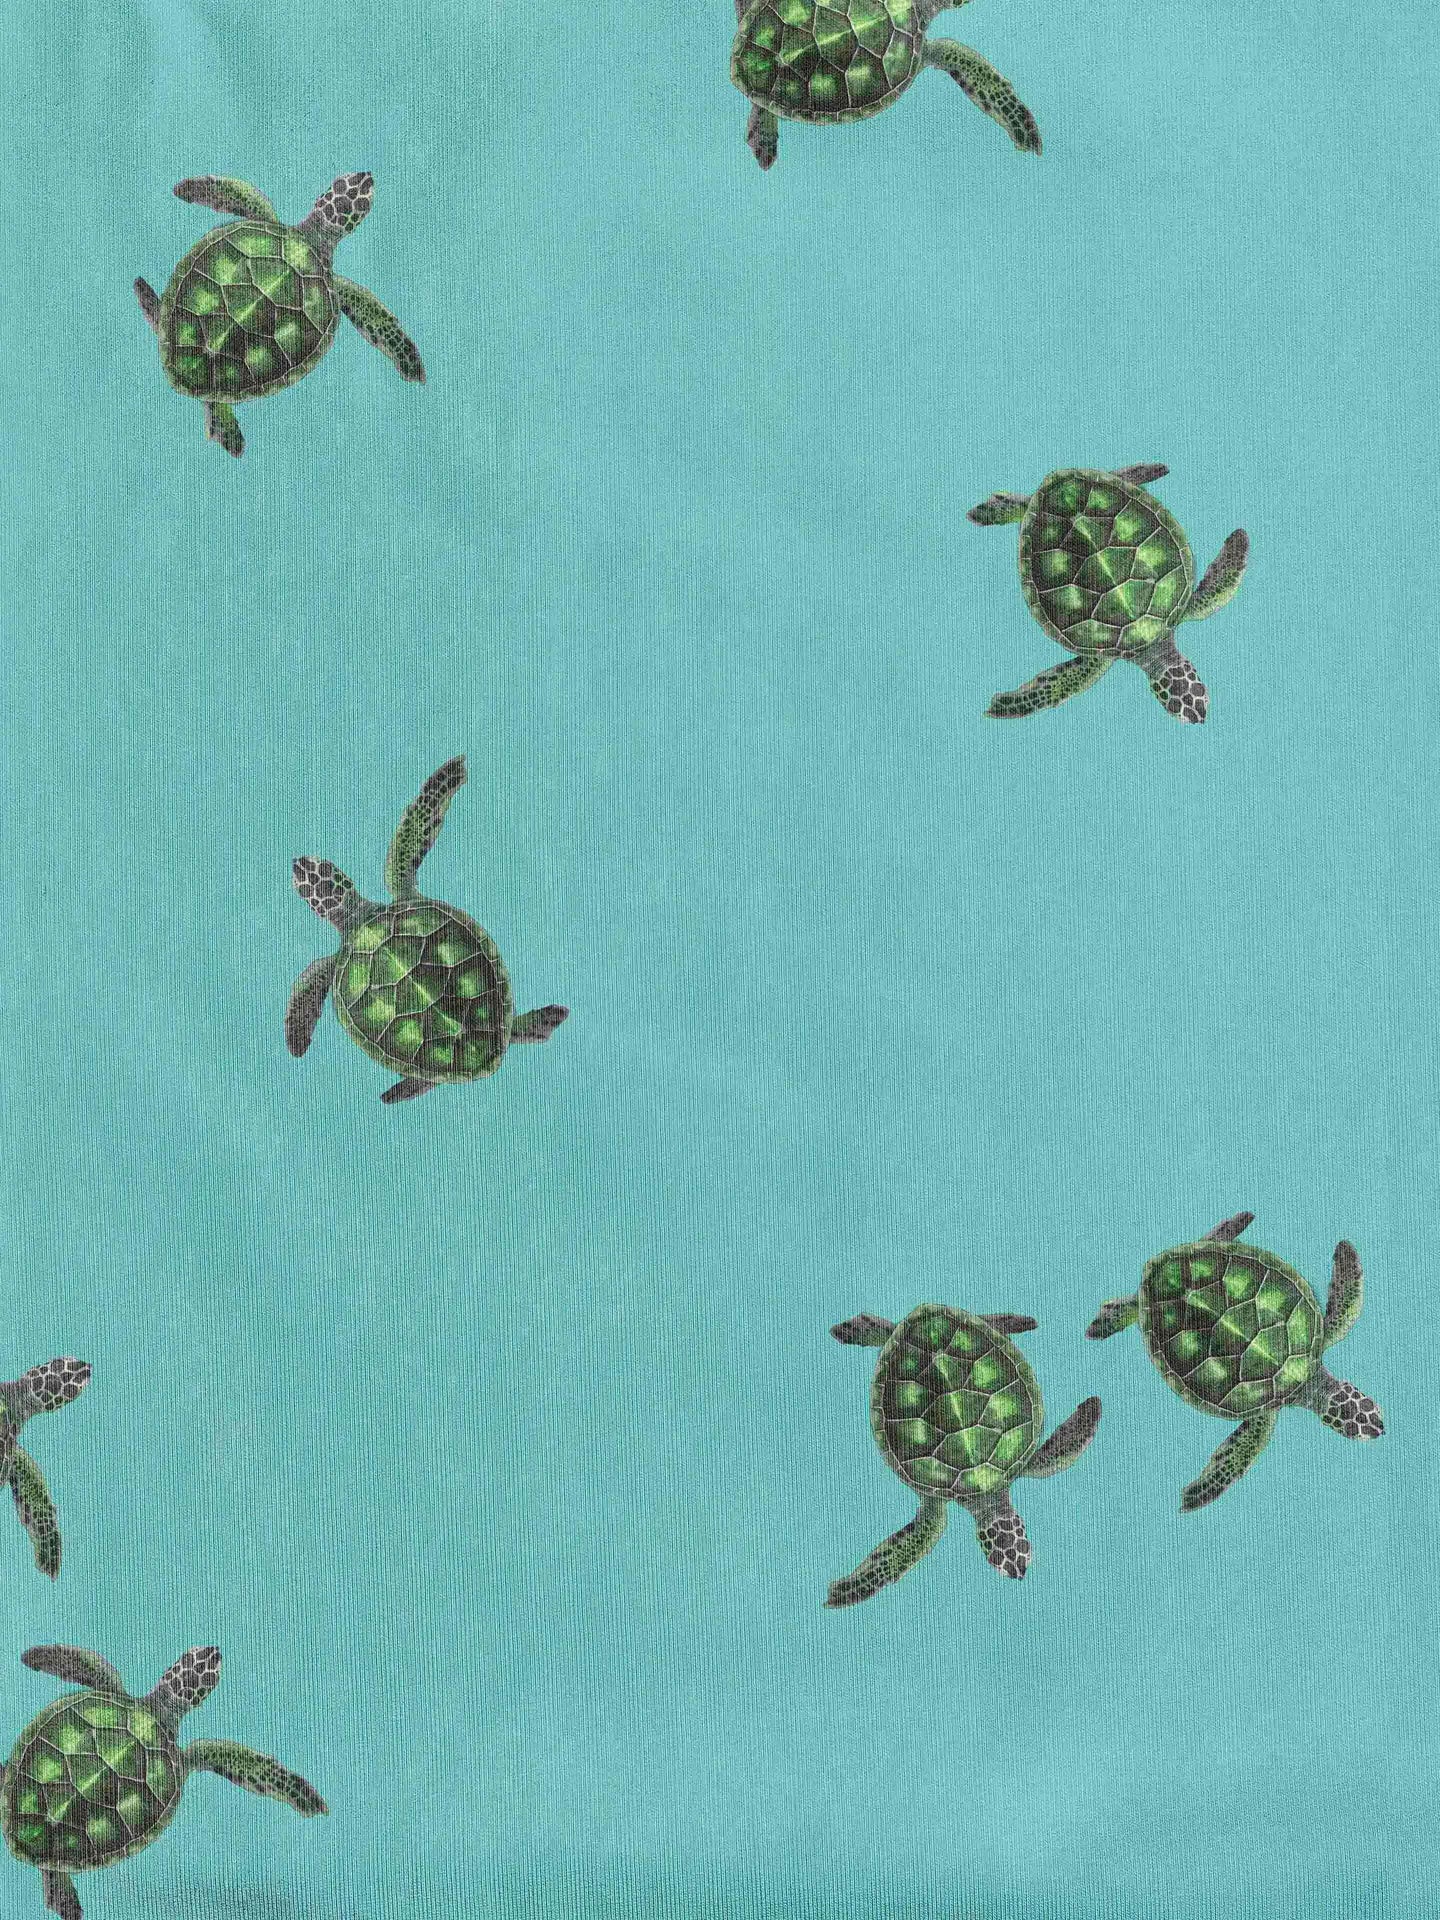 Sea Turtles T-shirt Unisex - SNURK